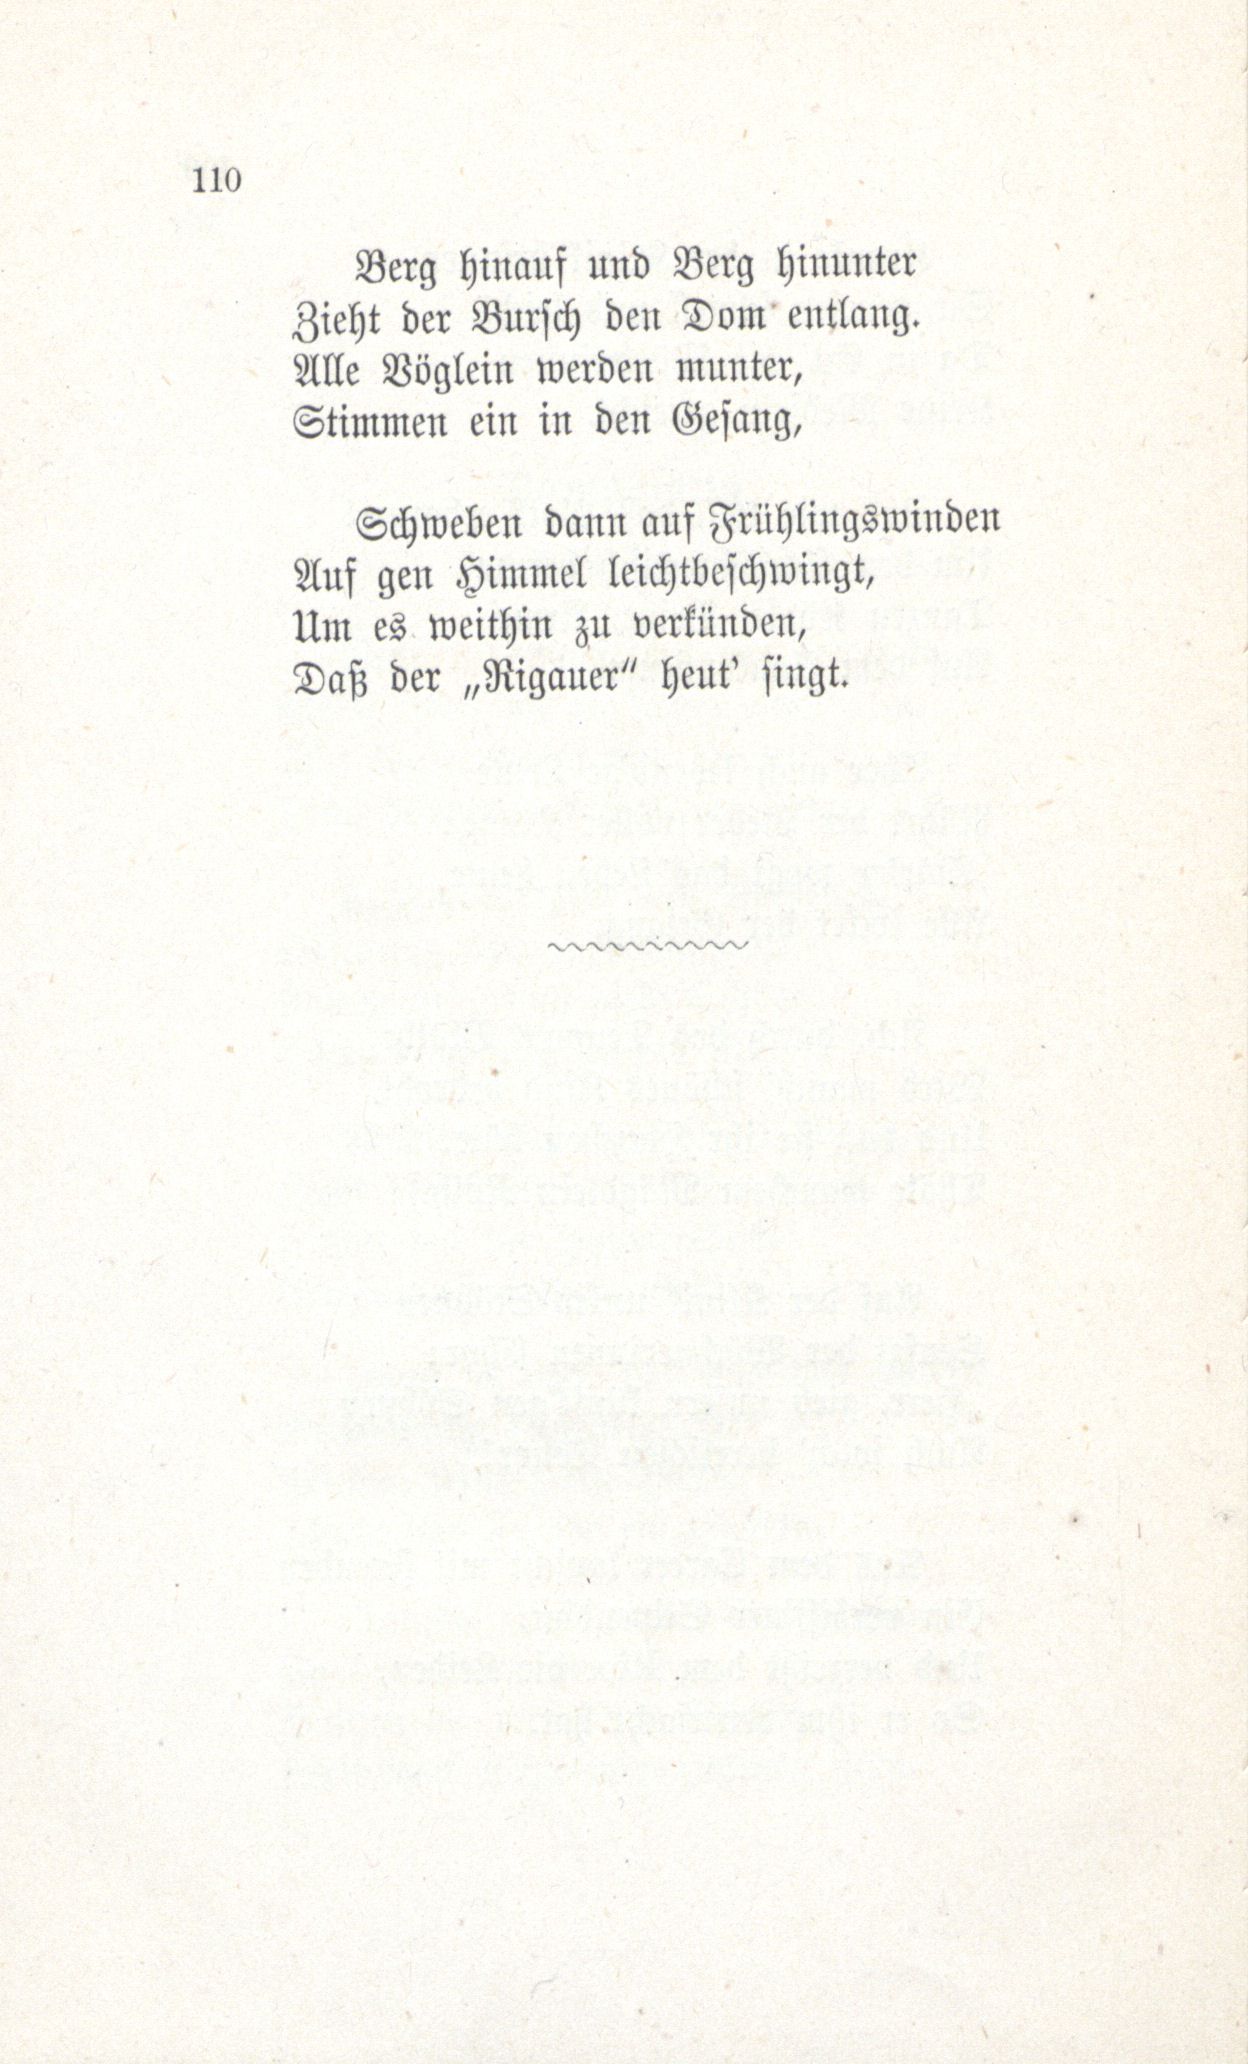 Erinnerung an die Fraternitas (1880) | 111. (110) Main body of text